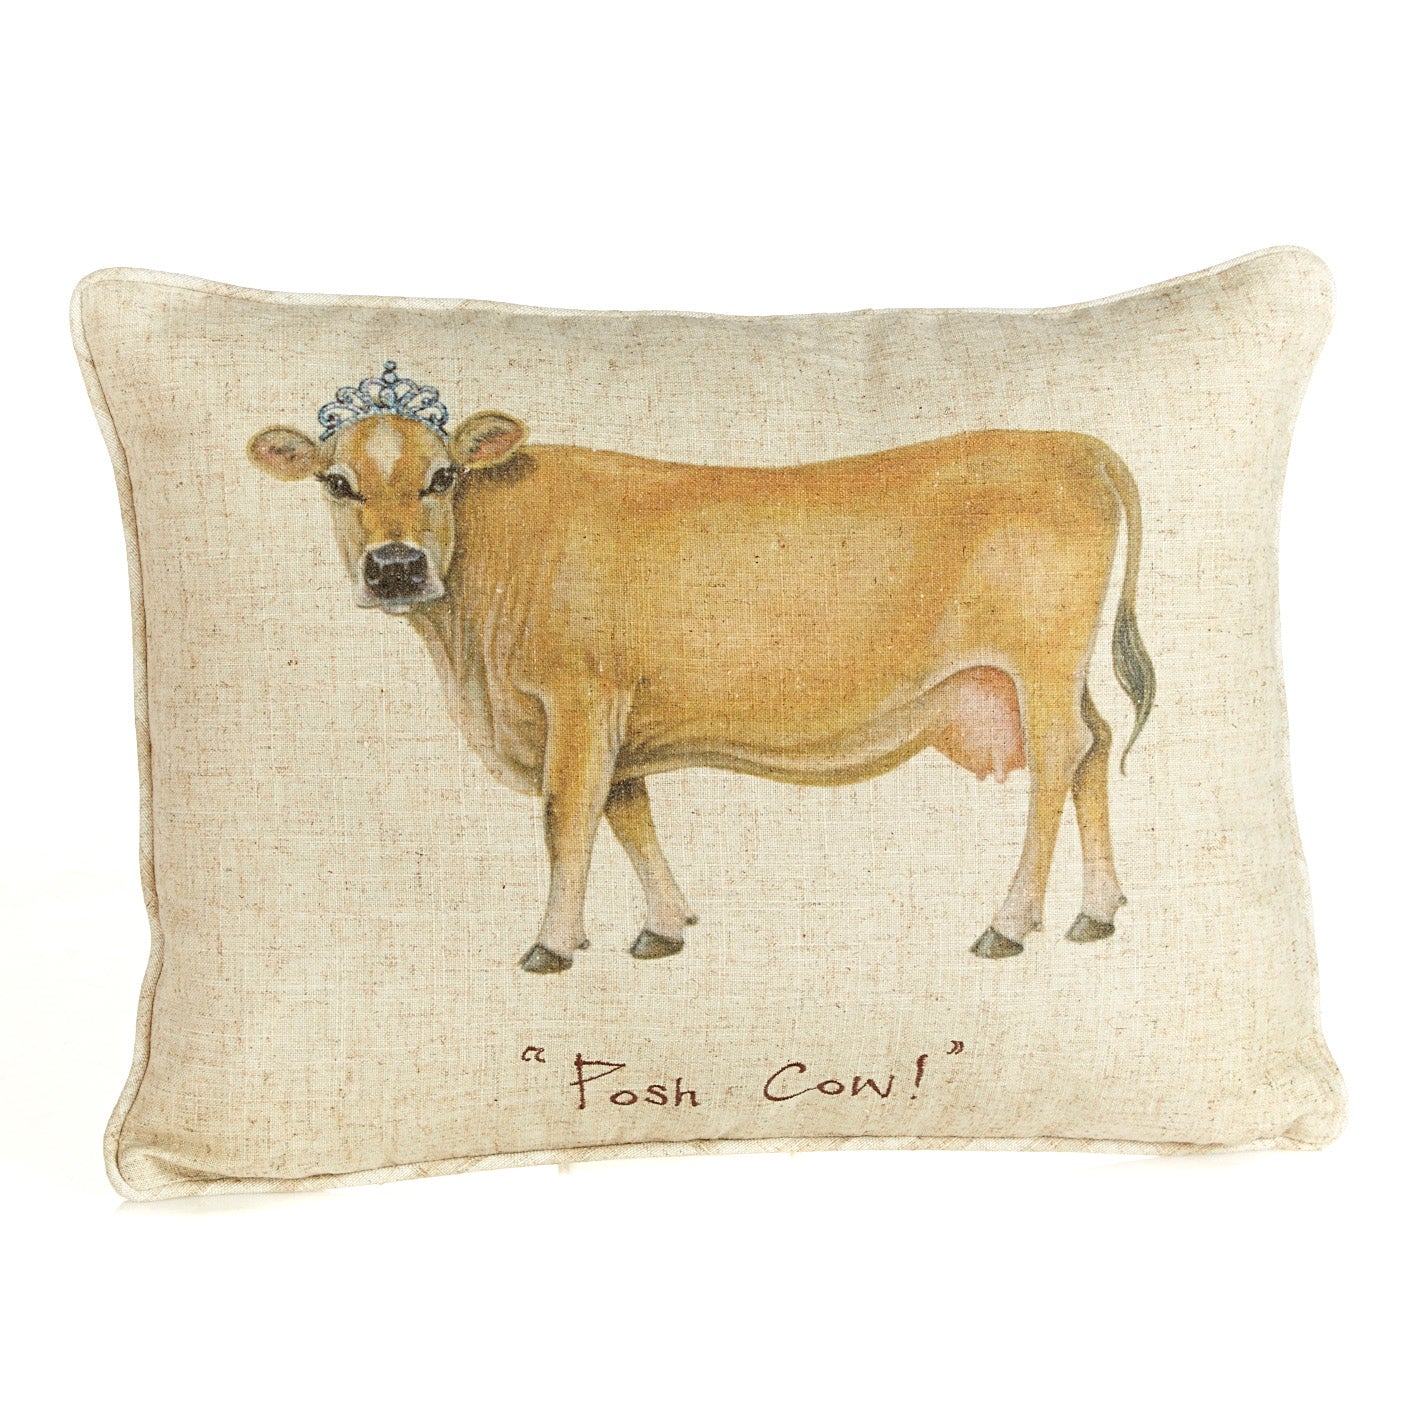 "Posh Cow!" Linen Mix Cushion